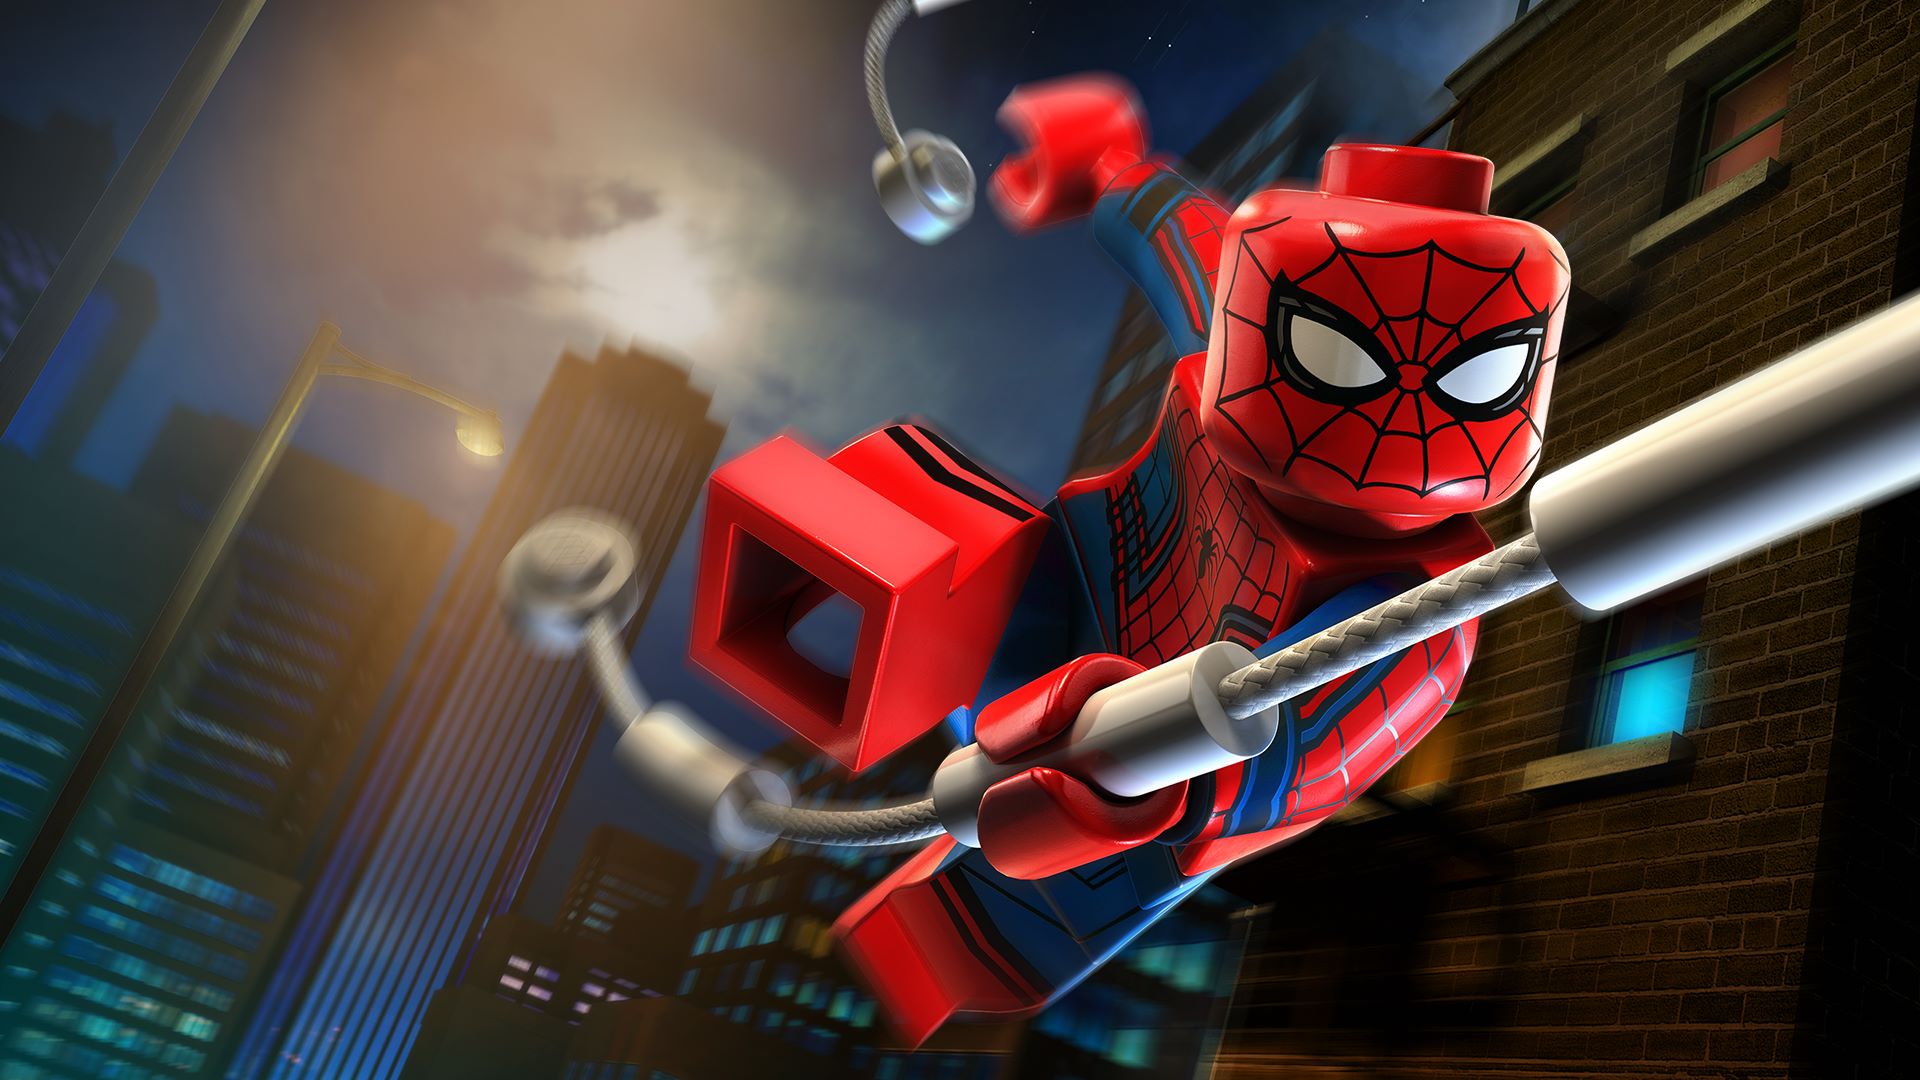 Lego marvel avengers game download for pc torrent